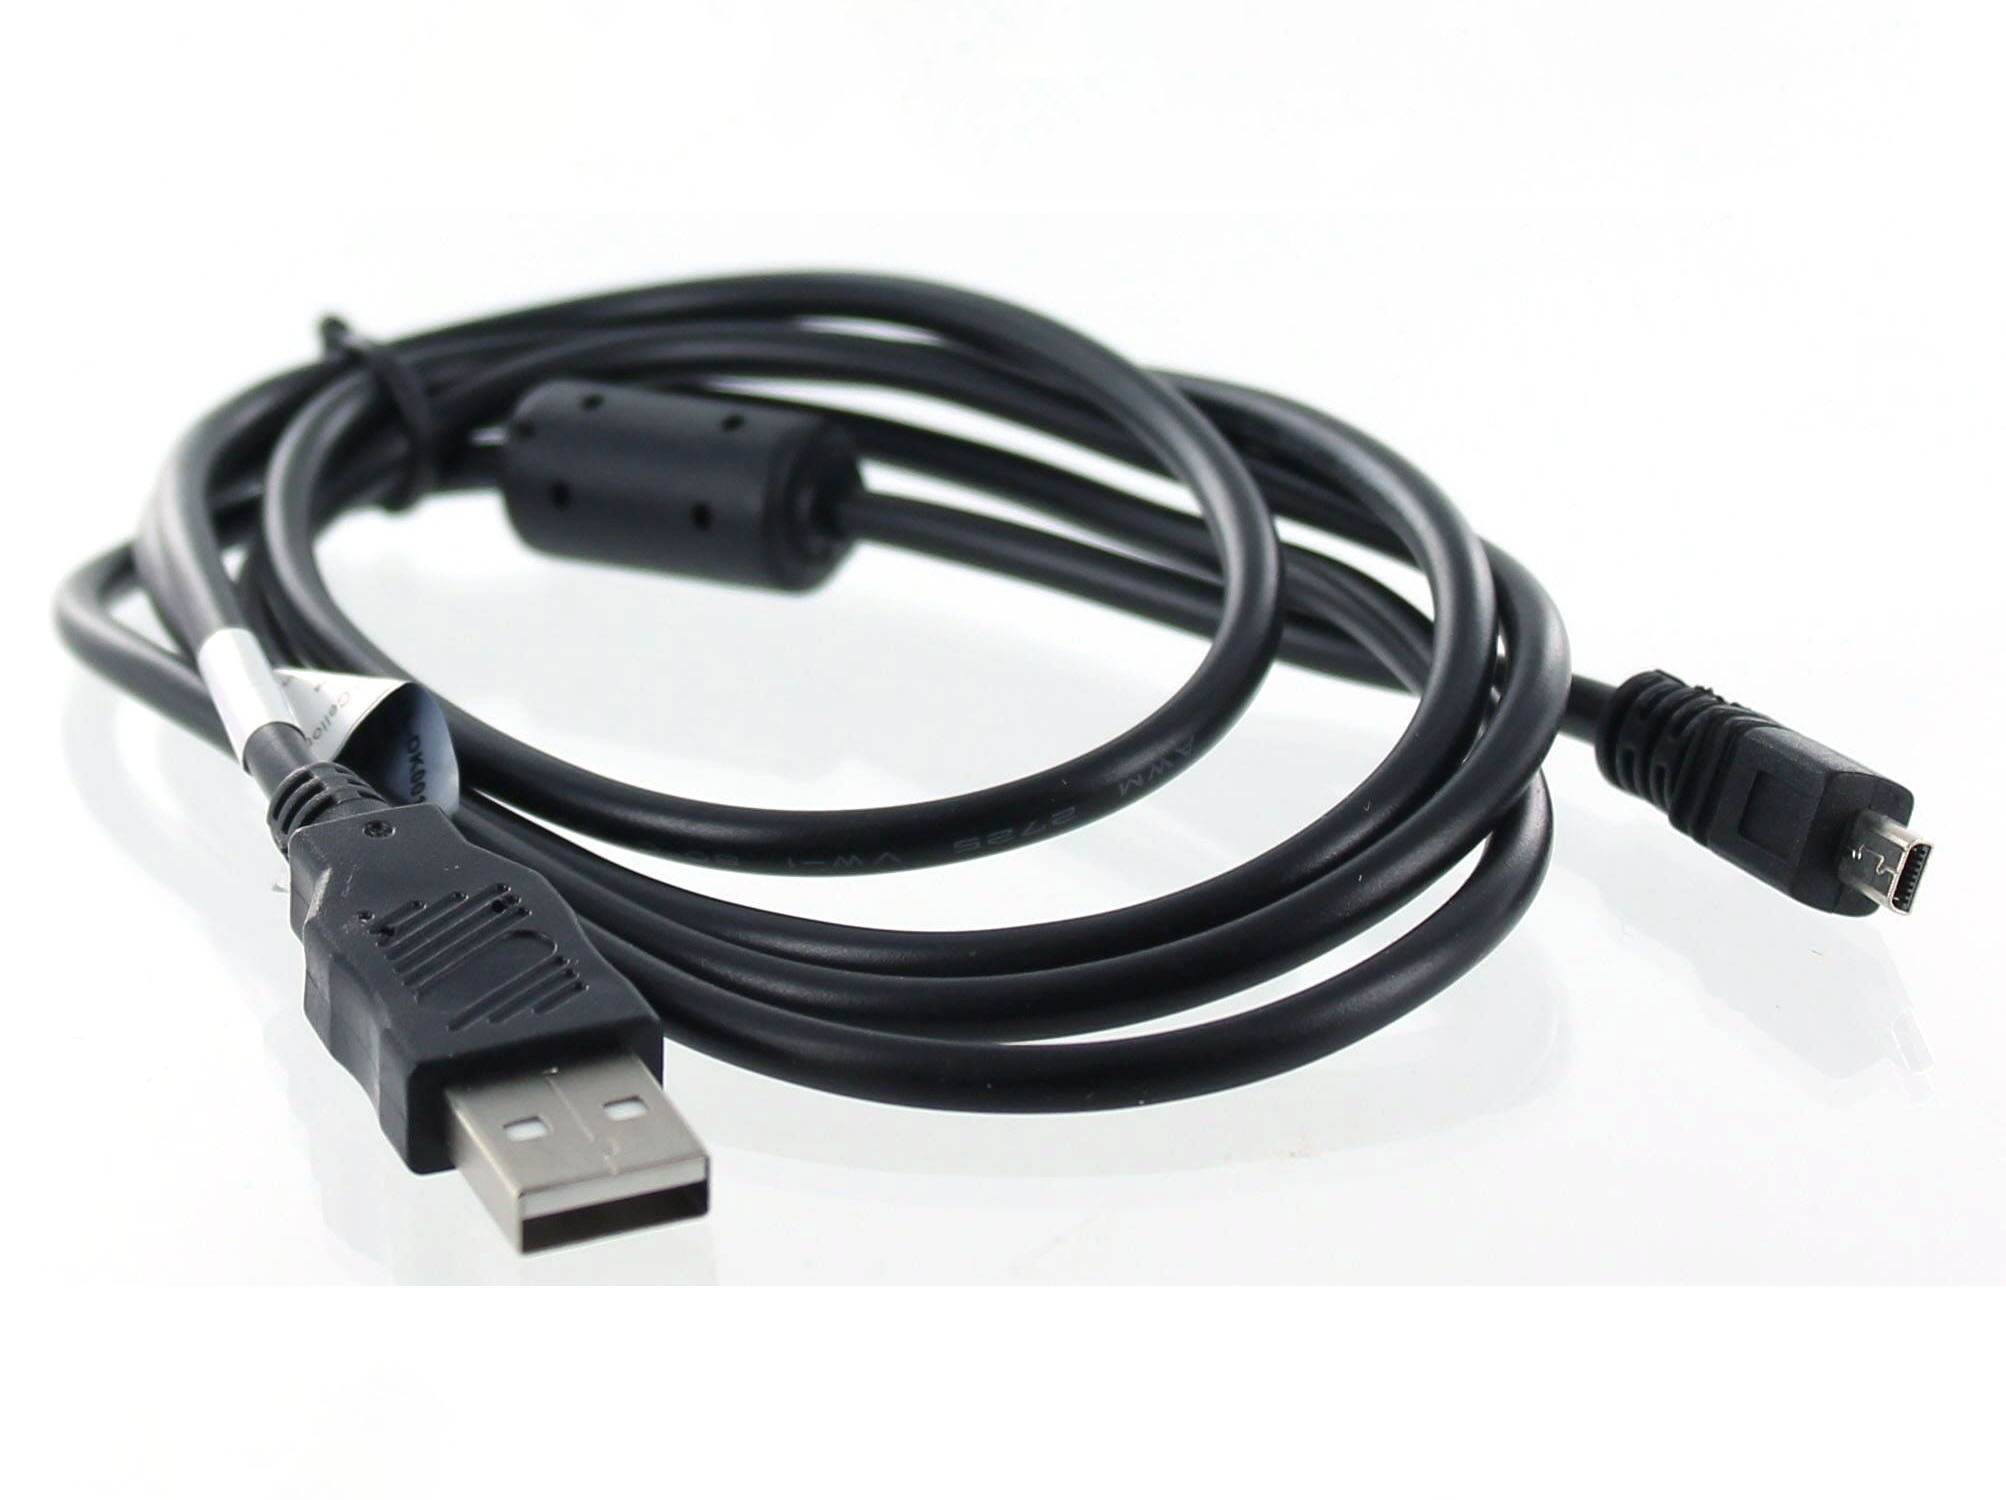 Zubehör USB-Datenkabel Coolpix mit S2800 Nikon Nikon, kompatibel schwarz MOBILOTEC